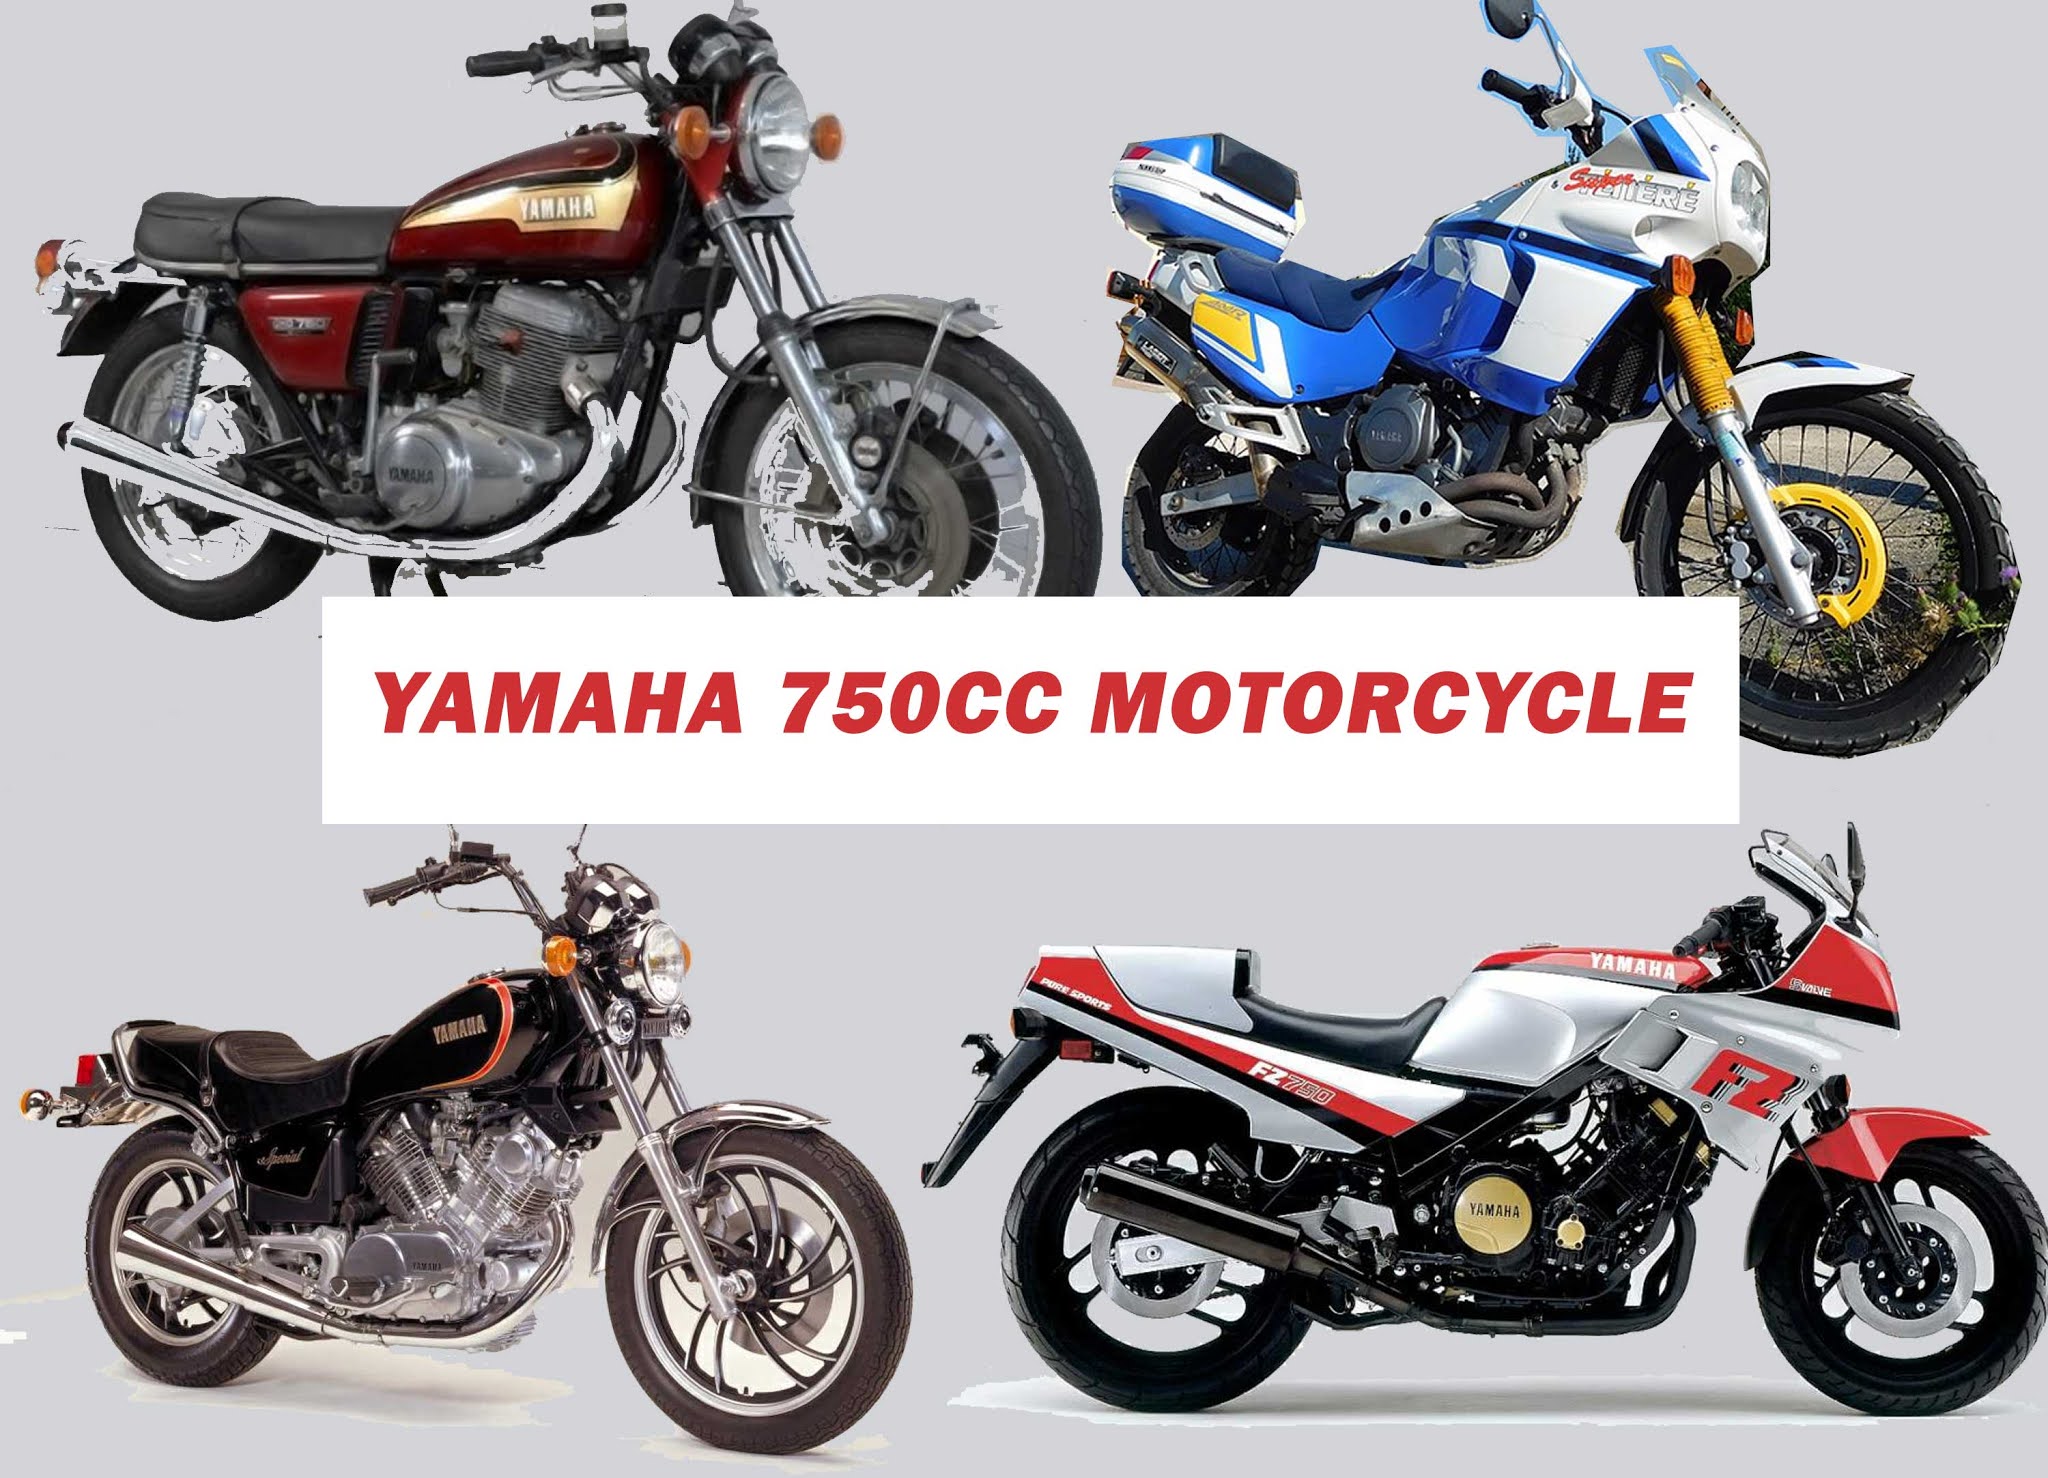 Yamaha 750cc Motorcycle